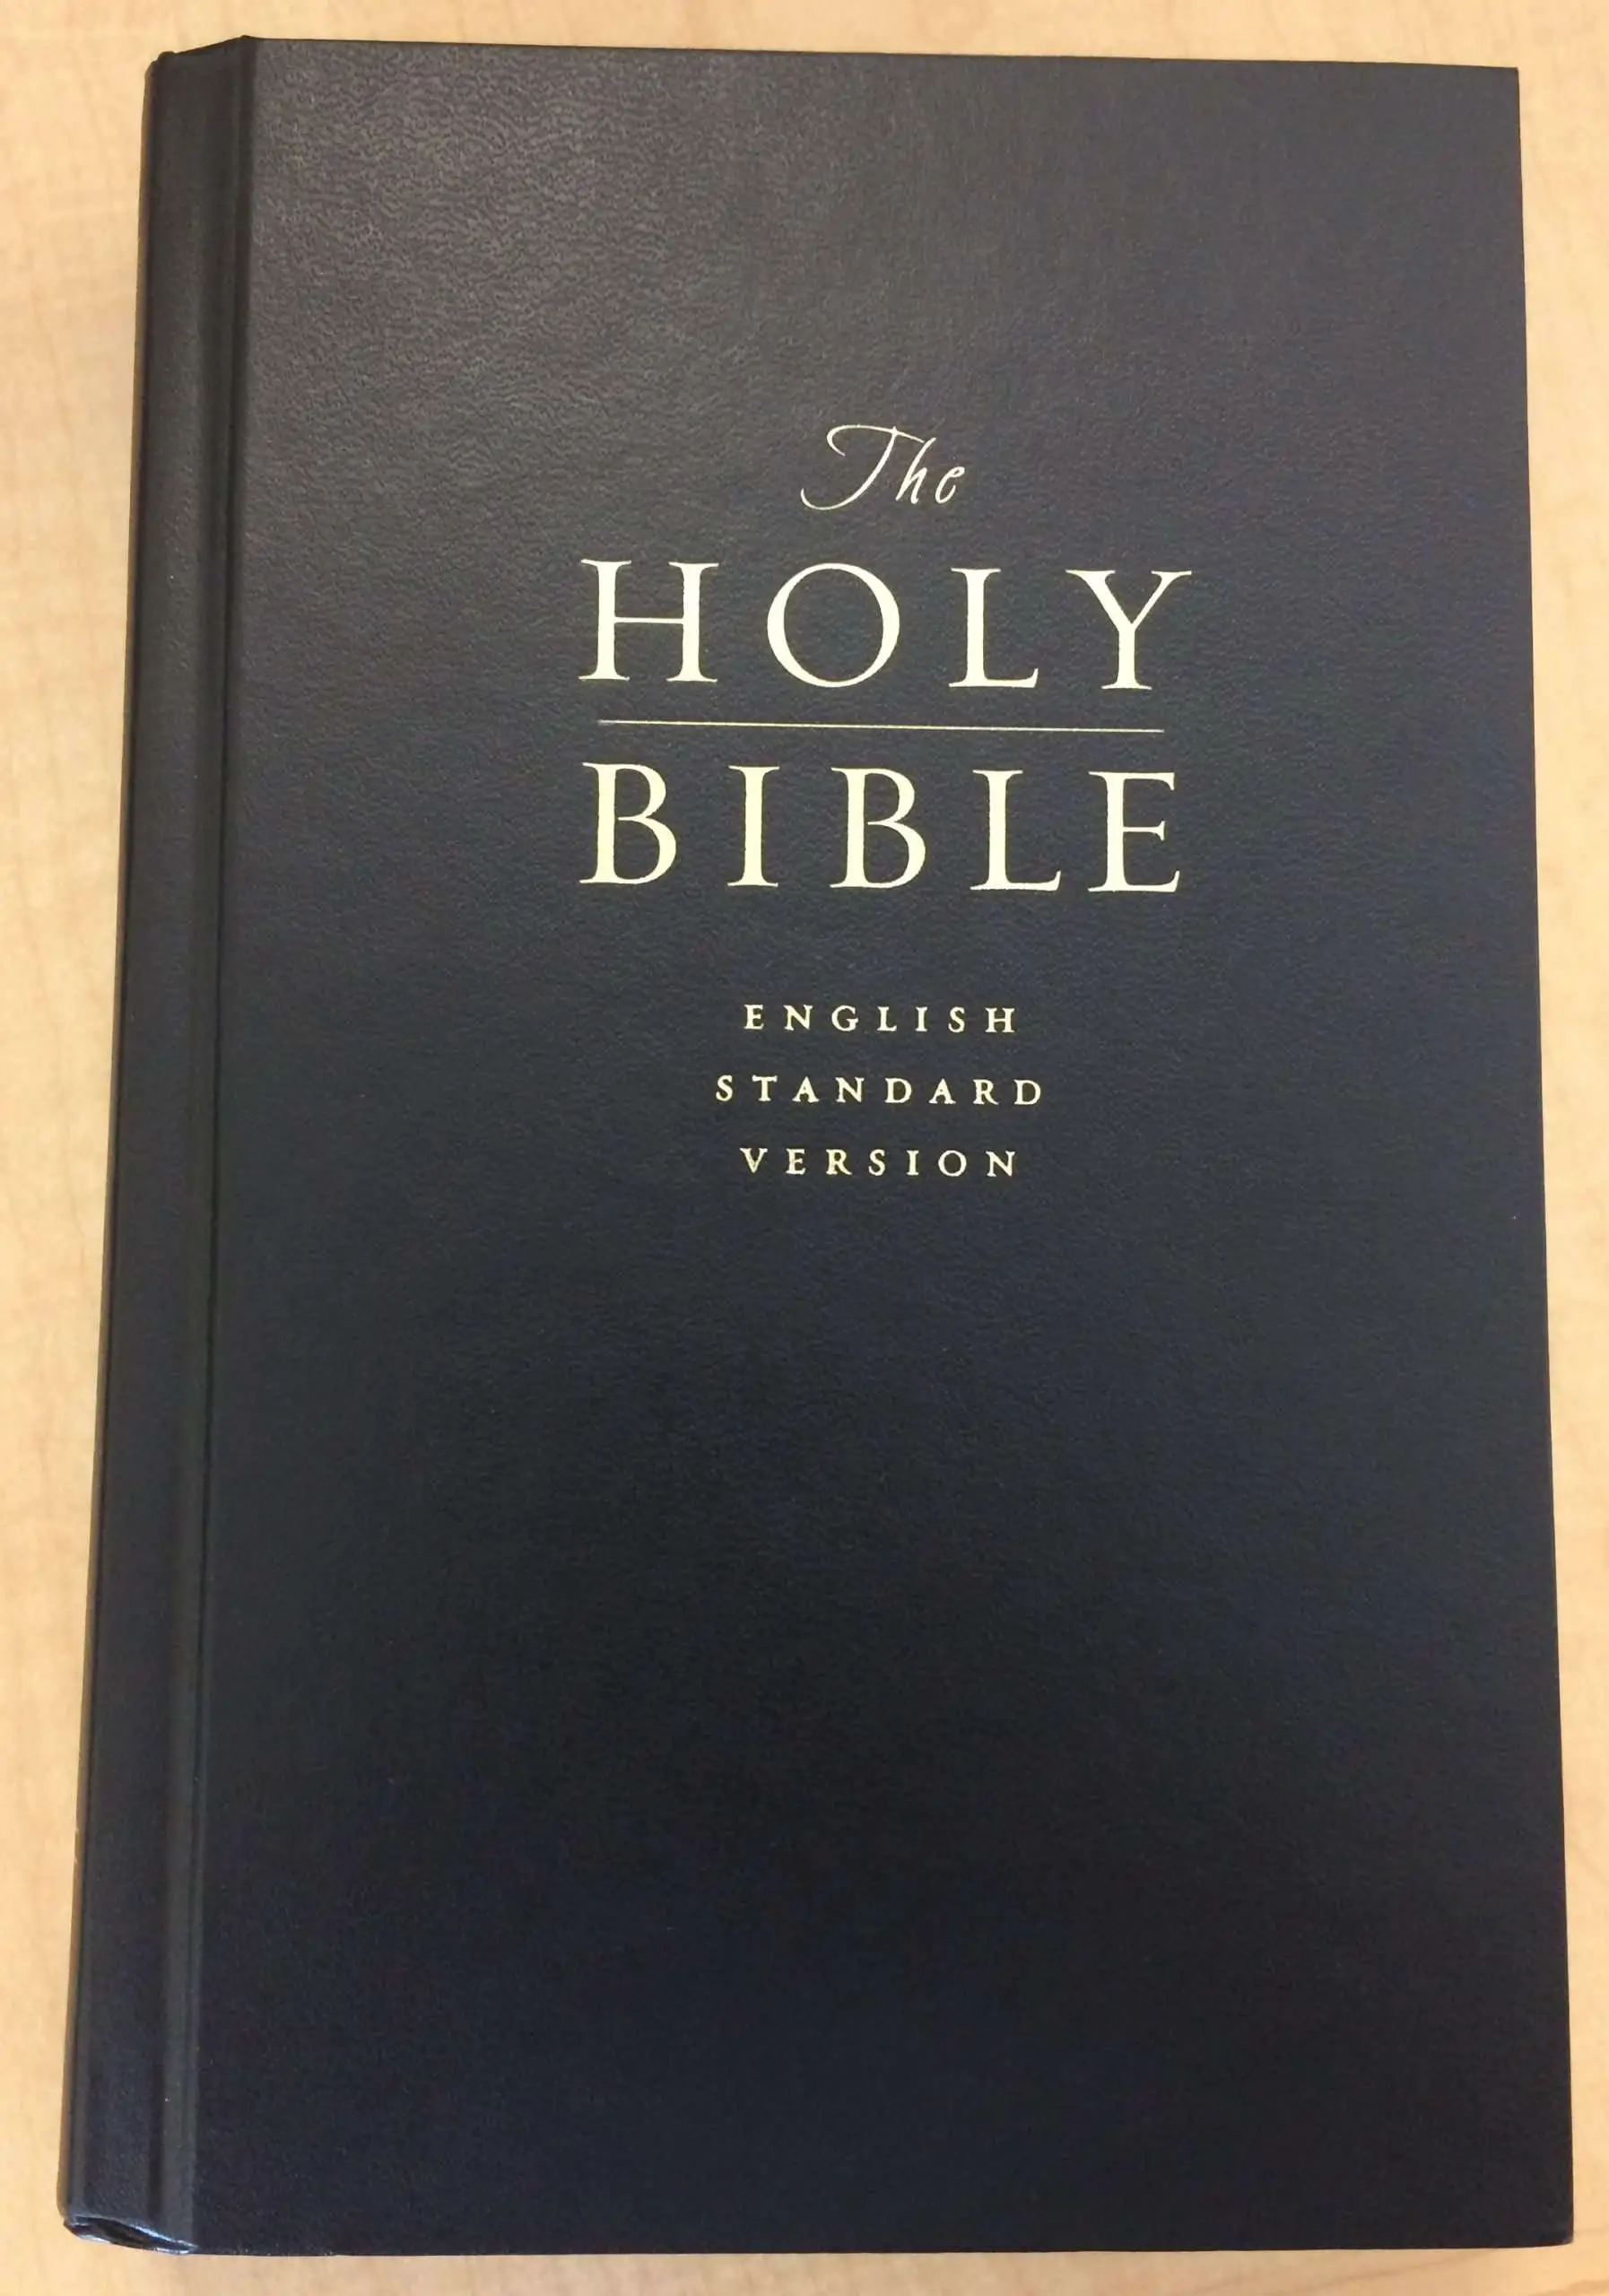 easiest bible to understand 2022